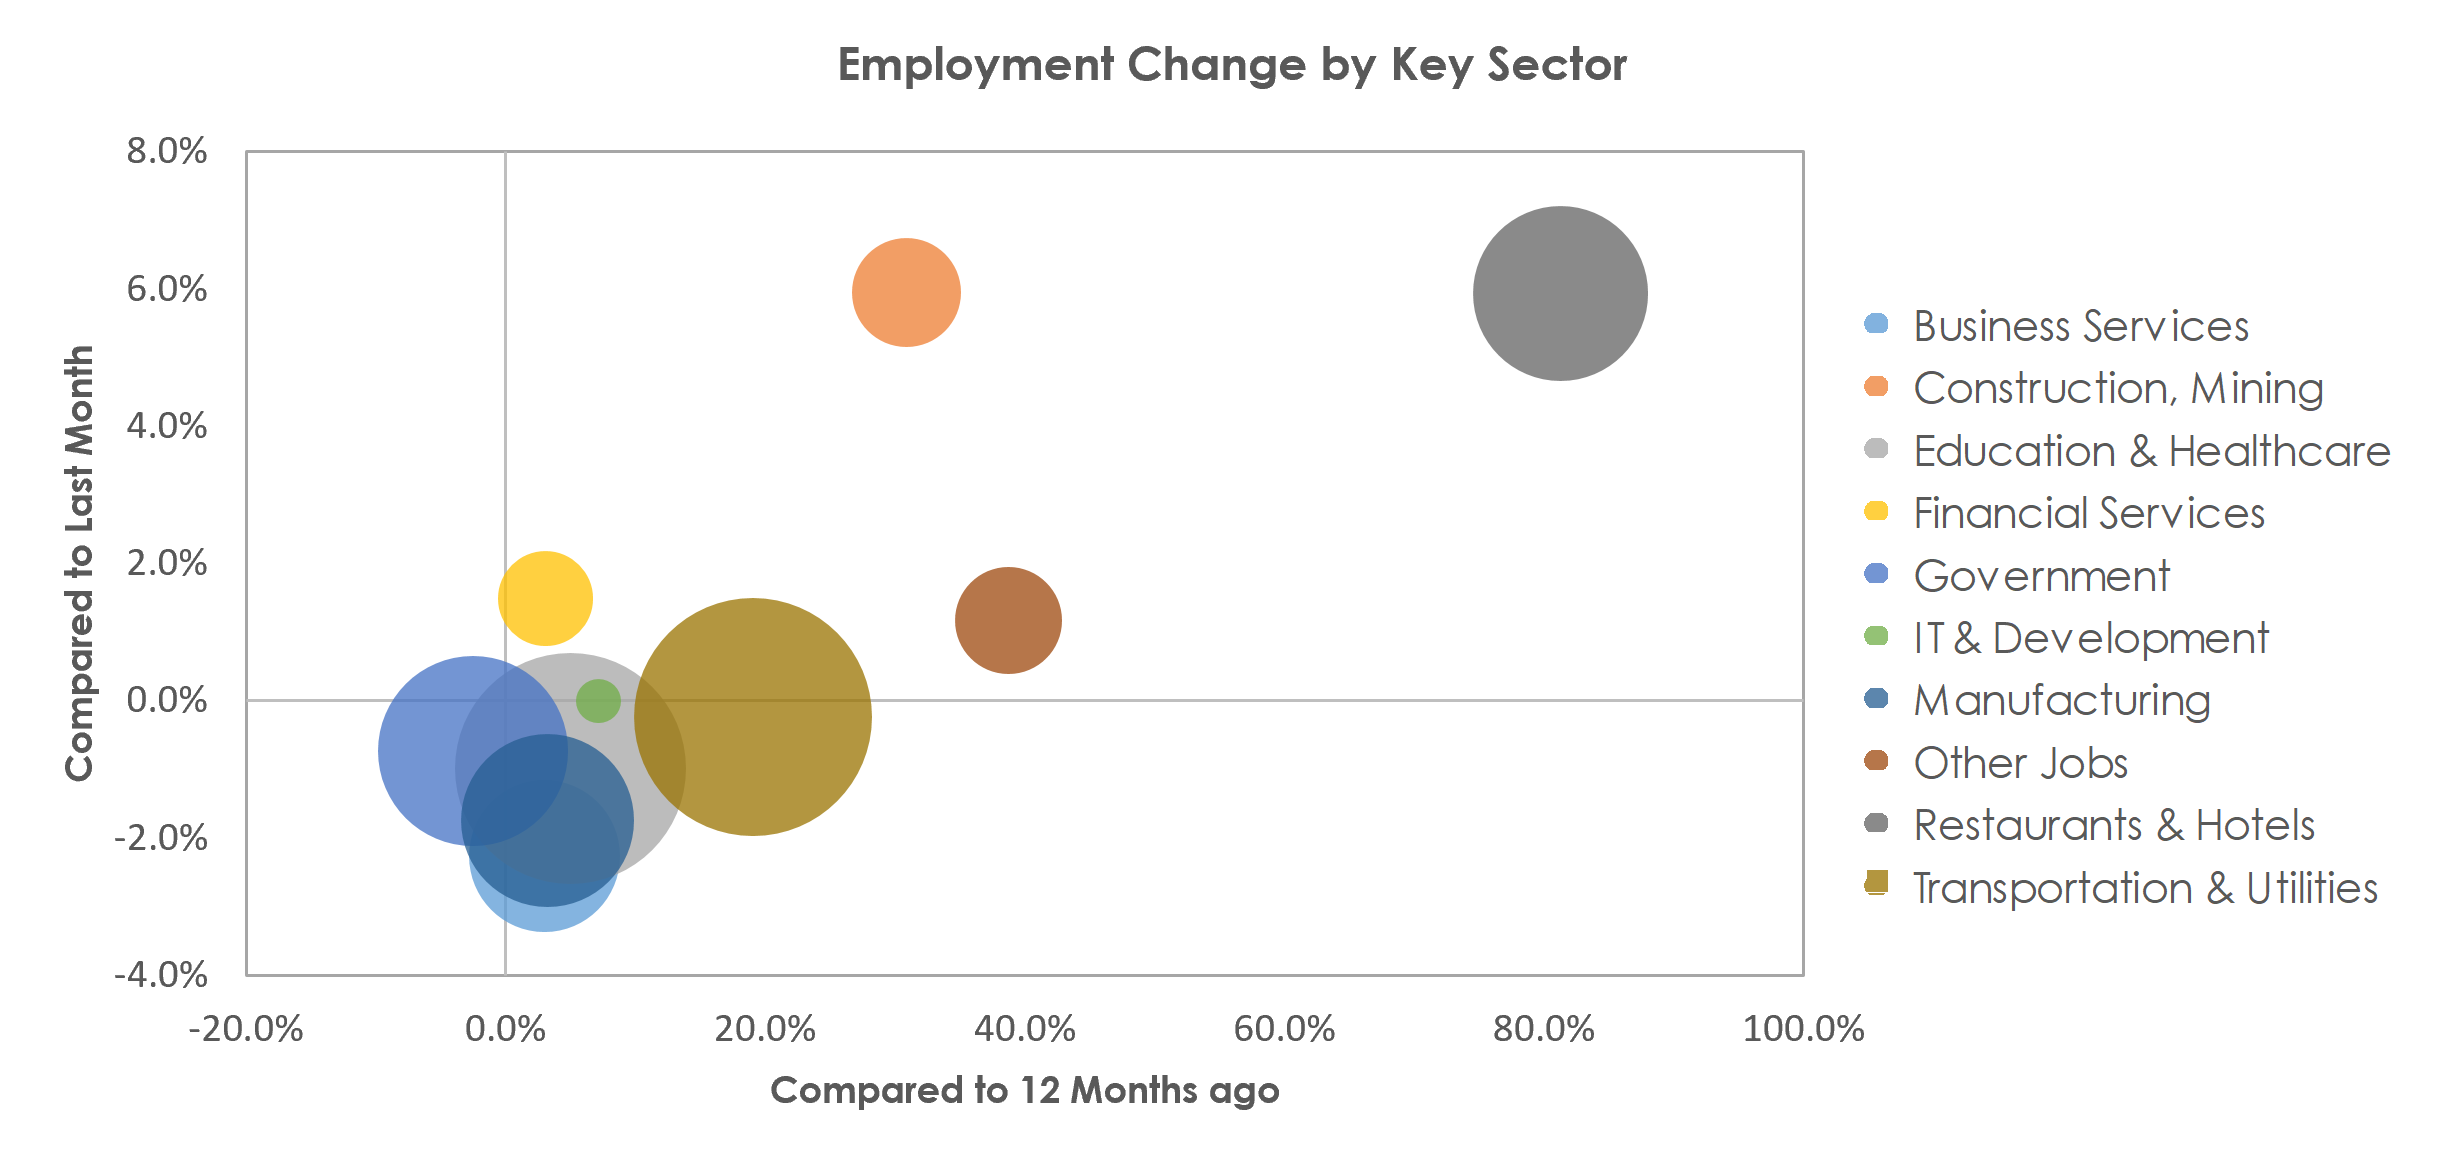 Youngstown-Warren-Boardman, OH-PA Unemployment by Industry April 2021